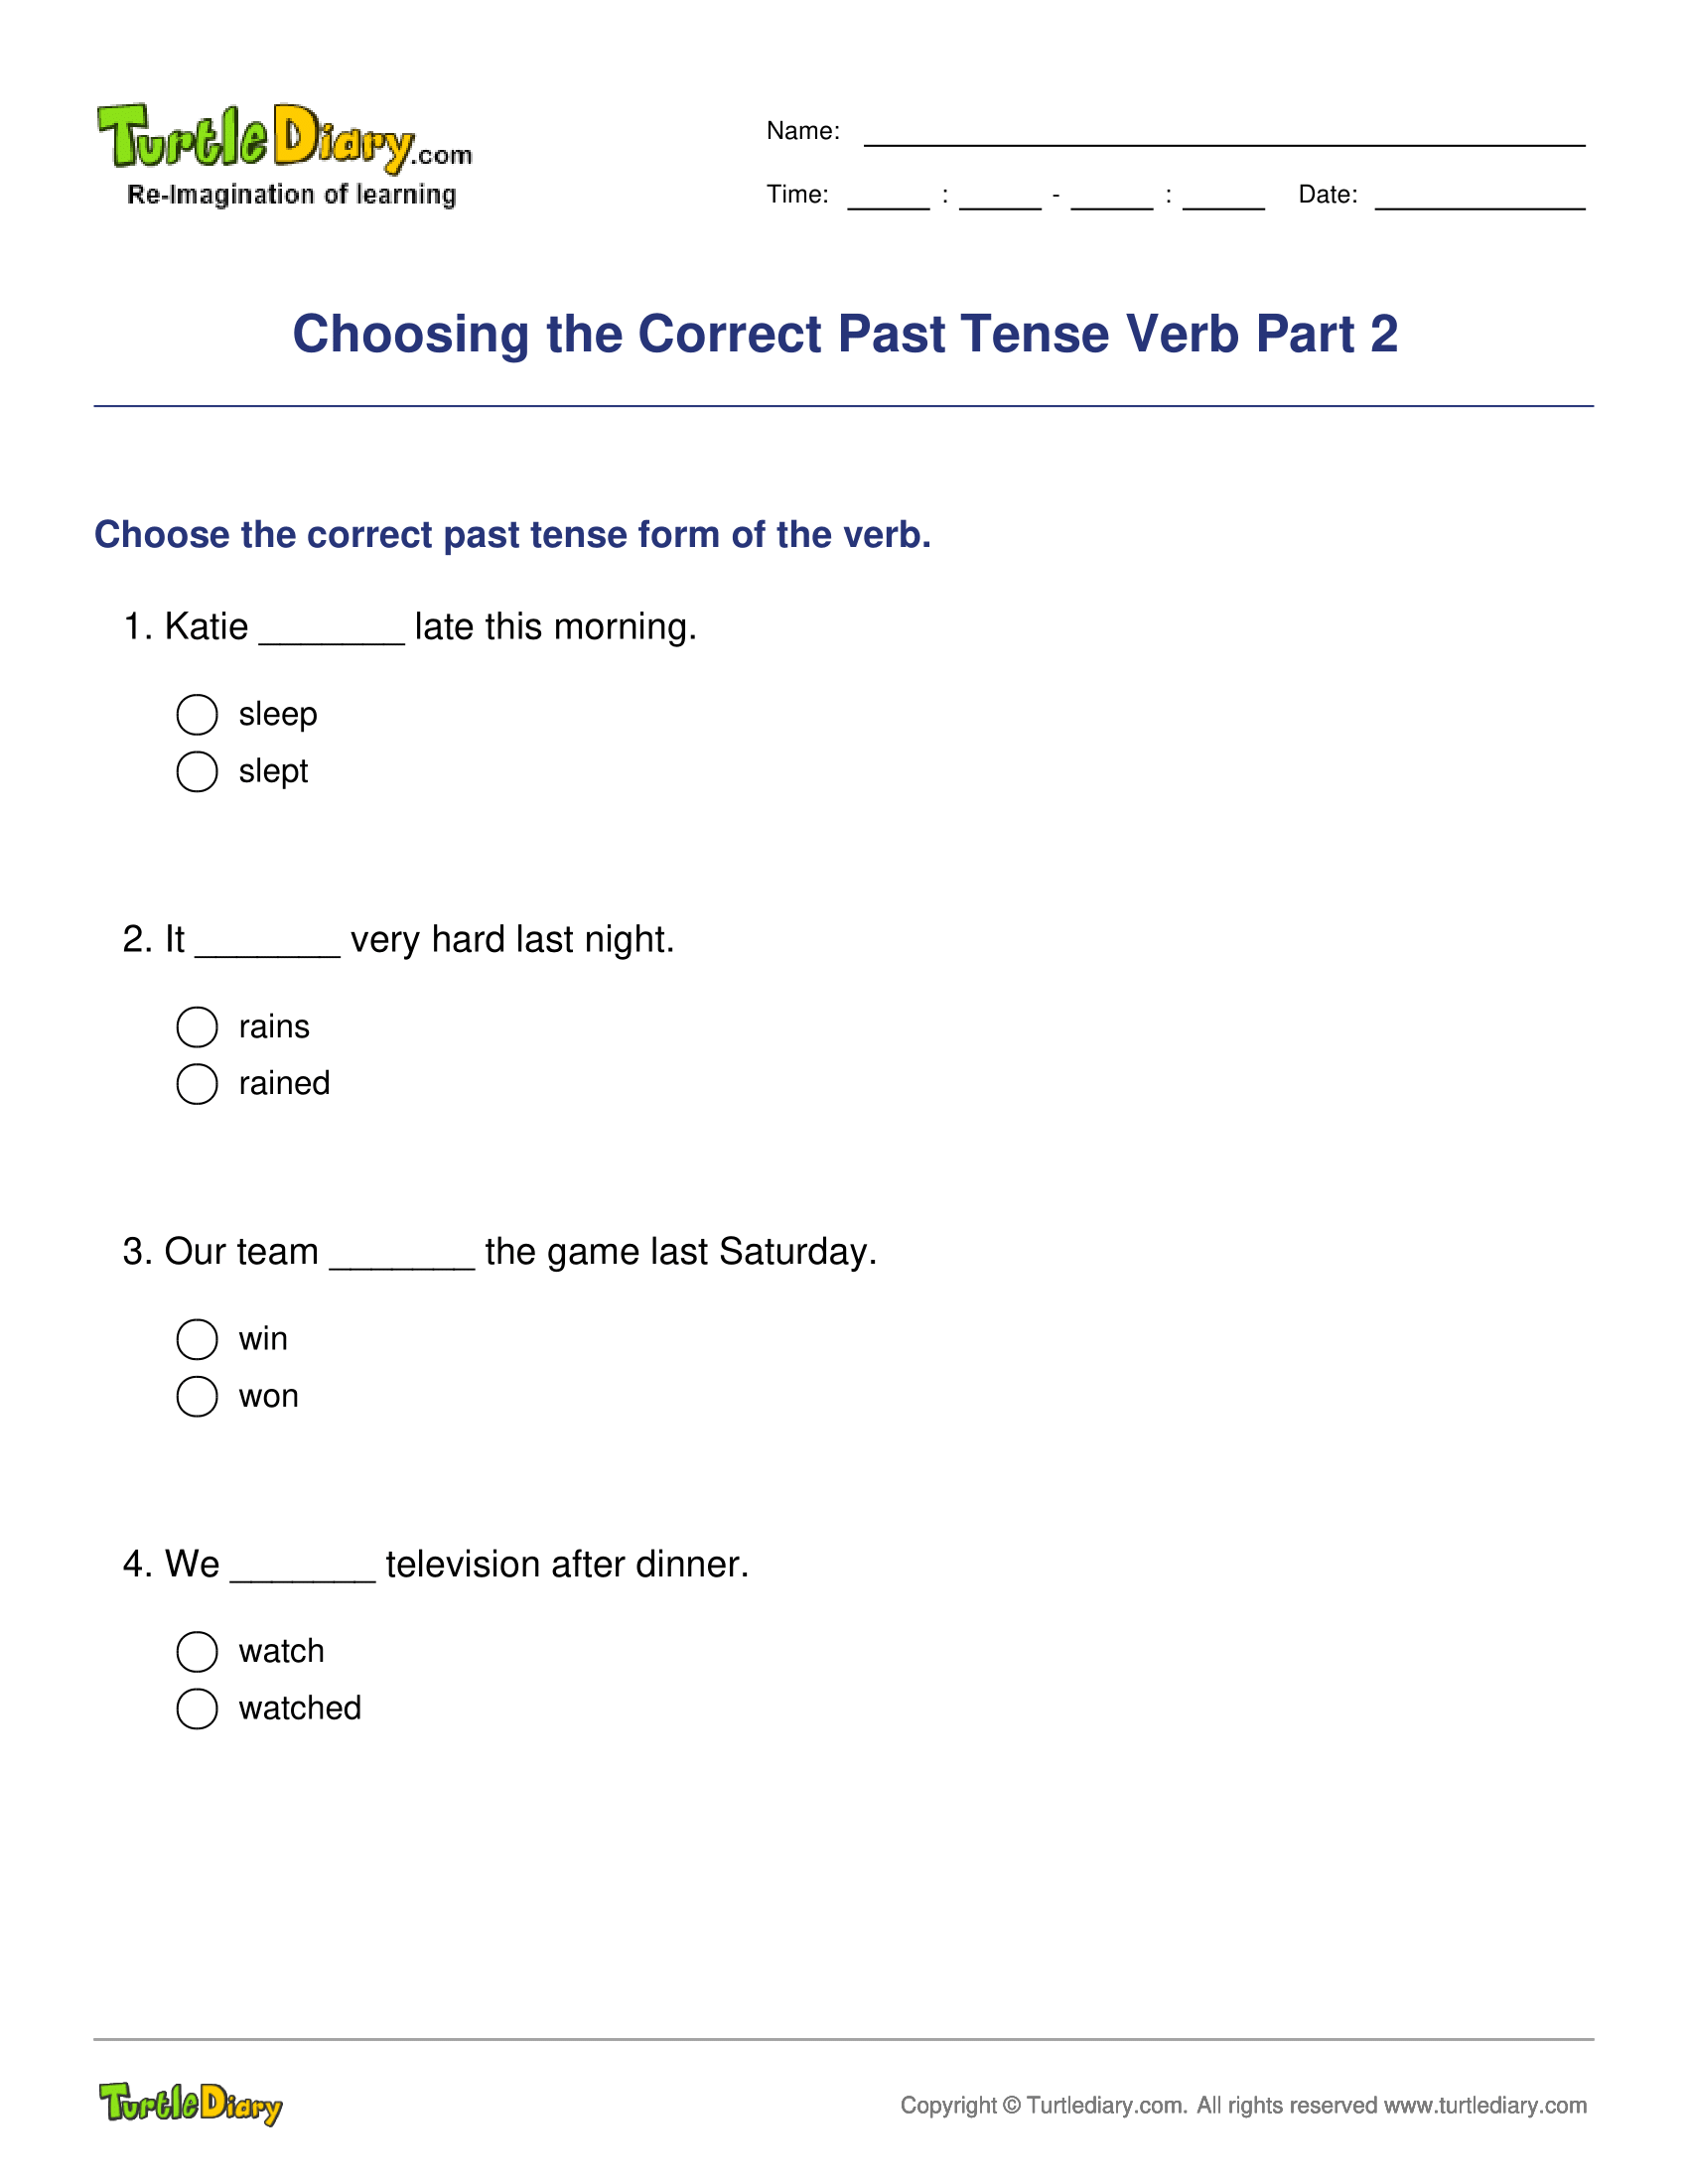 Choosing the Correct Past Tense Verb Part 2